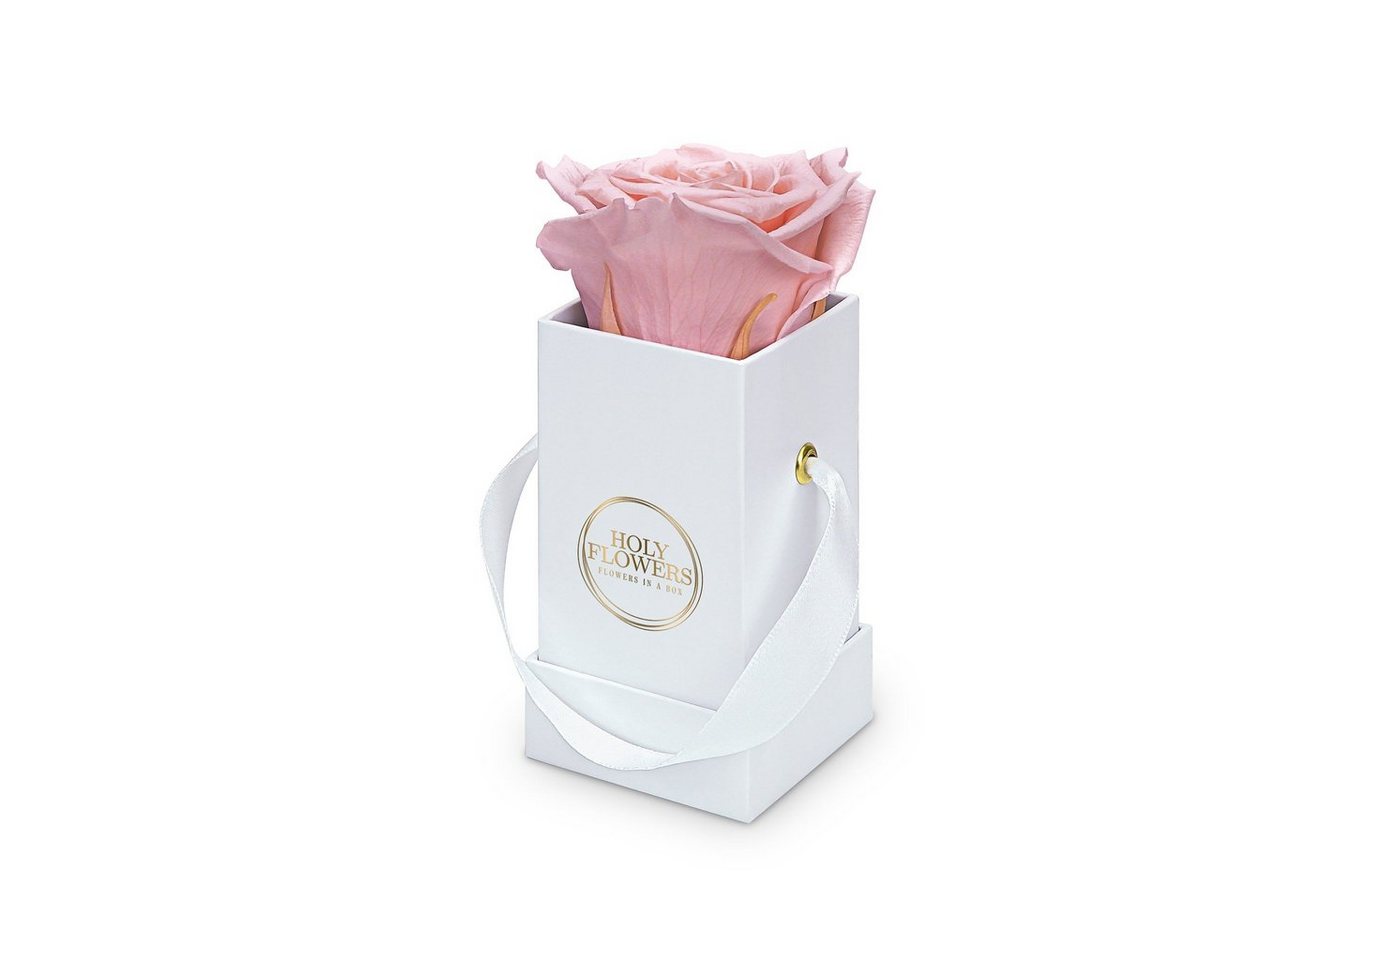 Kunstblume Eckige Rosenbox in weiß mit 1er Infinity Rose I 1- 3 Jahre haltbar Infinity Rose, Holy Flowers, Höhe 9 cm von Holy Flowers